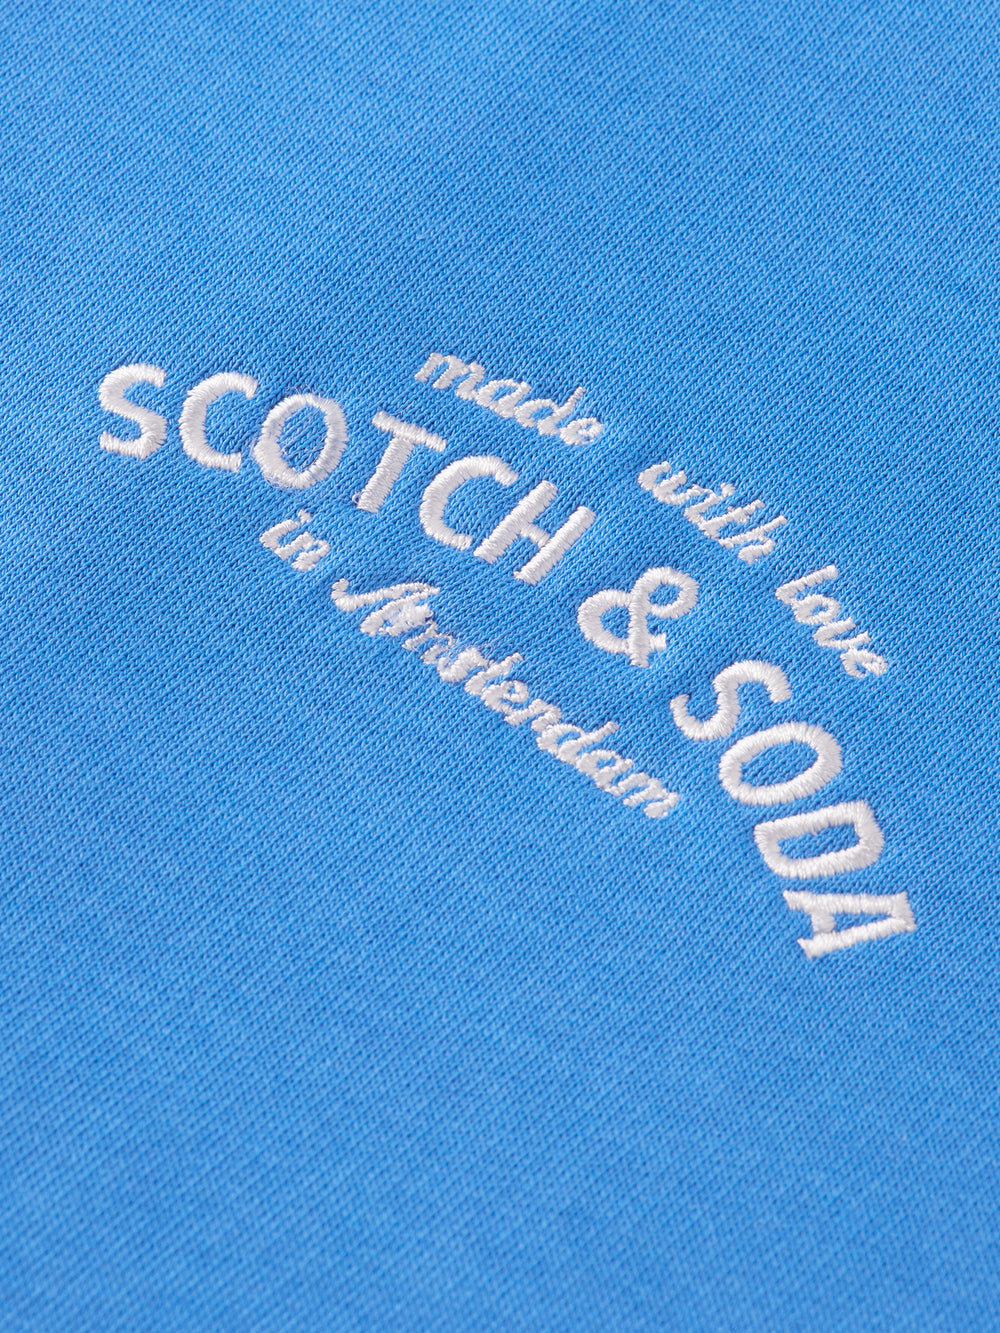 Relaxed-fit colourblock sweatshirt - Scotch & Soda NZ